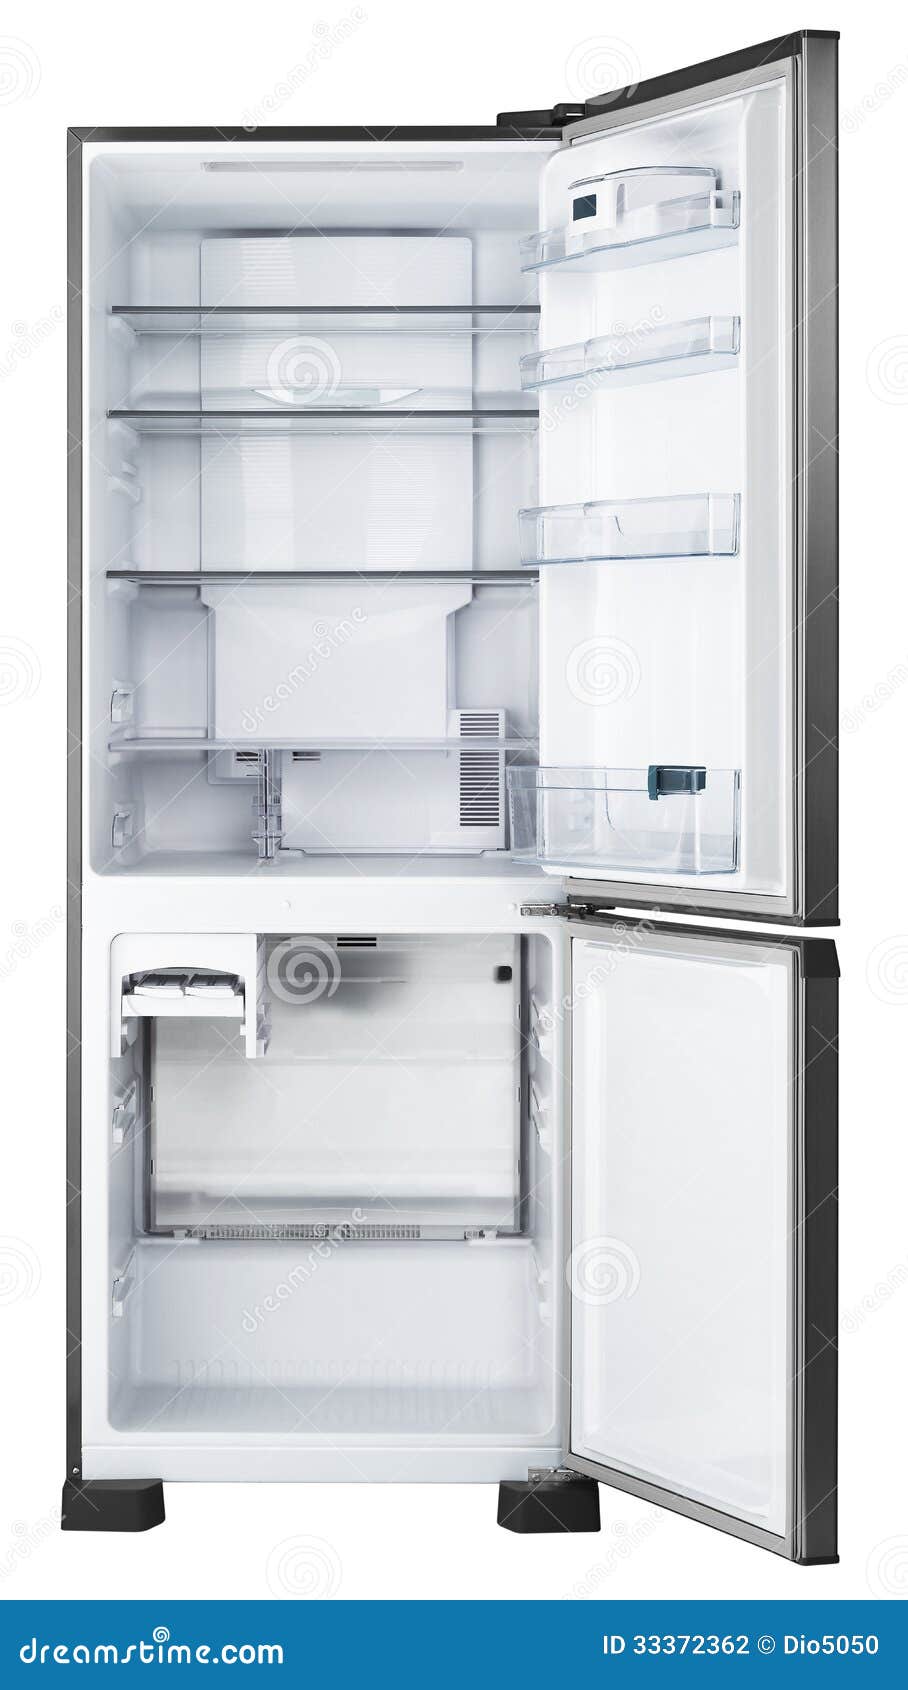 clipart empty fridge - photo #49